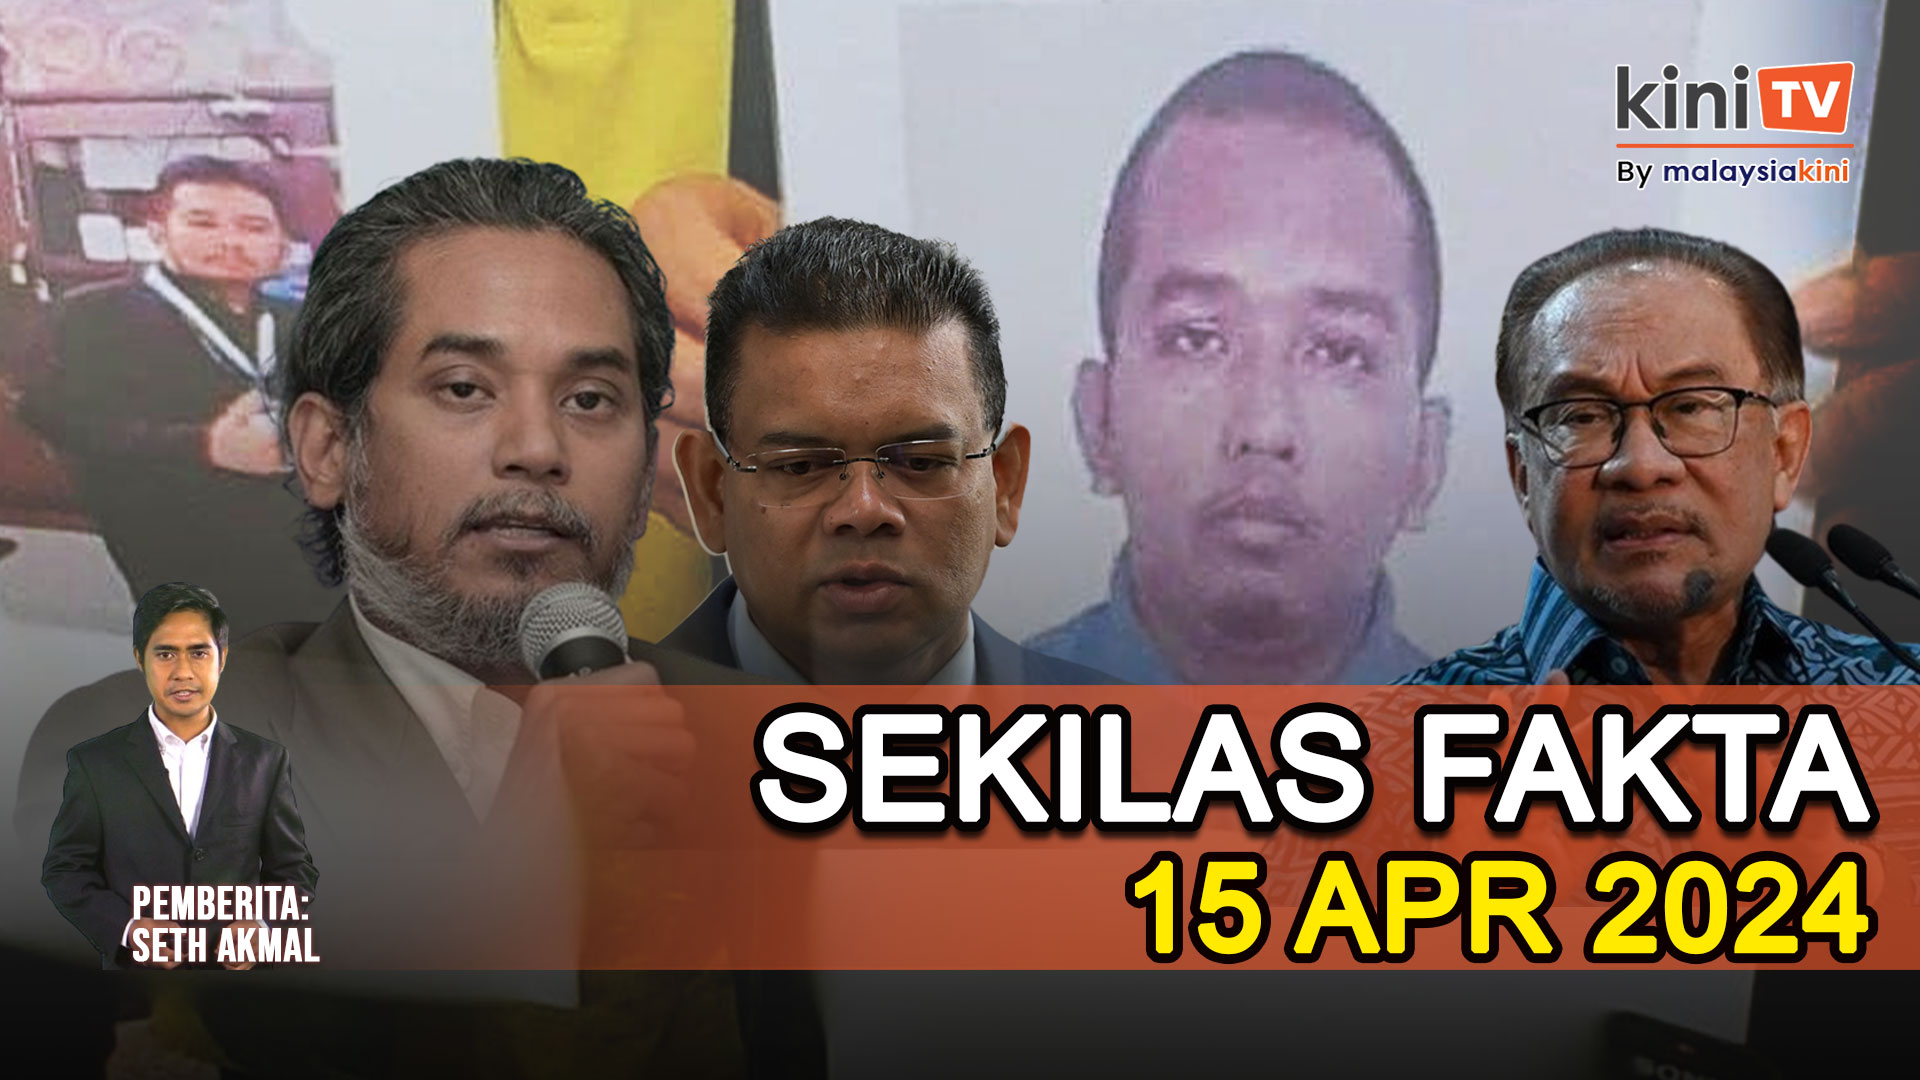 Menteri bodoh? Anwar enggan layan Akmal, Lokman mohon maaf KJ, Hafizul dah diberkas | SEKILAS FAKTA